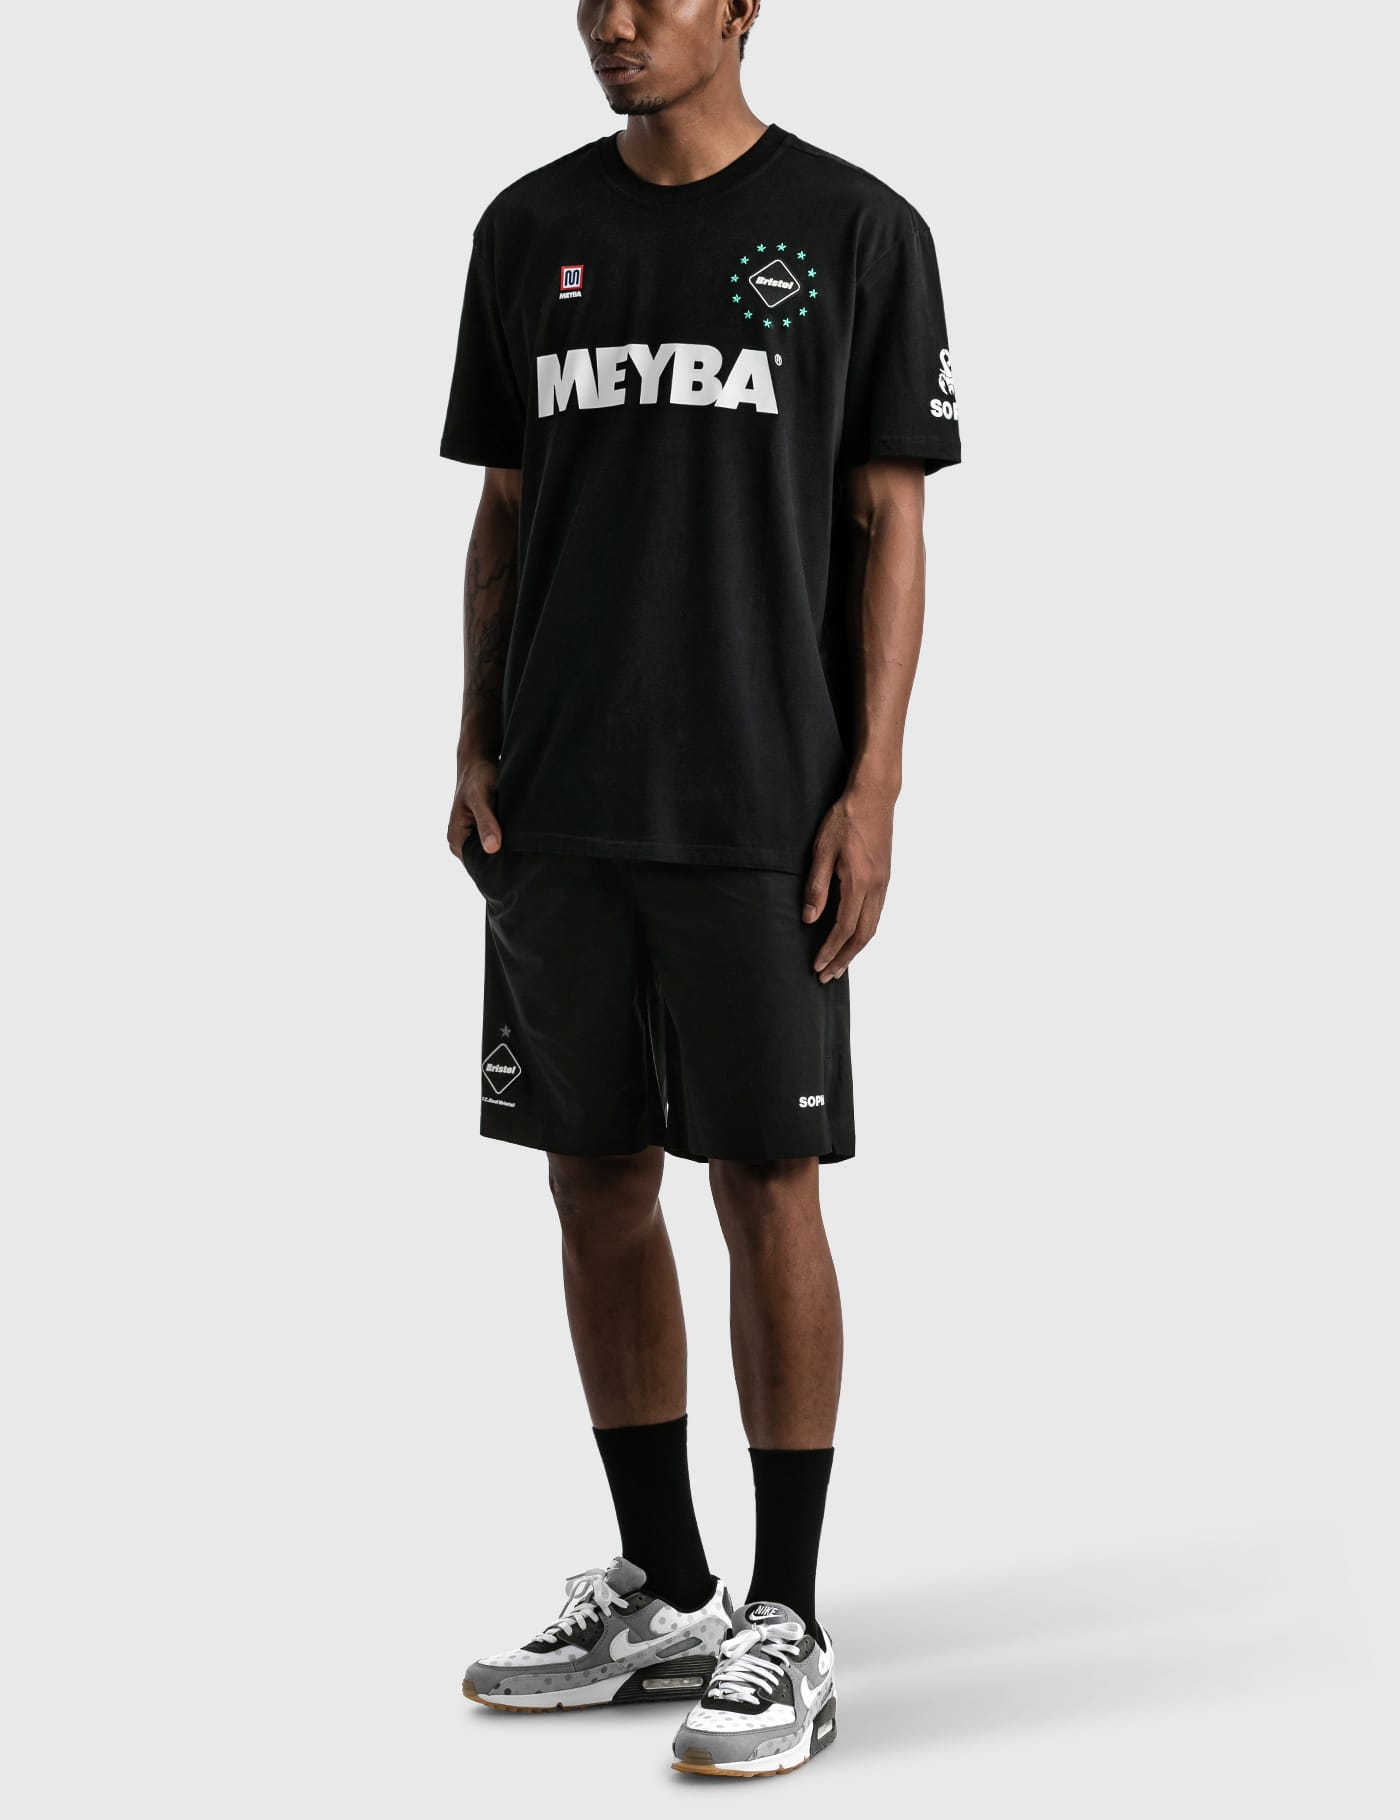 F.C. Real Bristol - F.C. Real Bristol x Meyba トレーニング Tシャツ